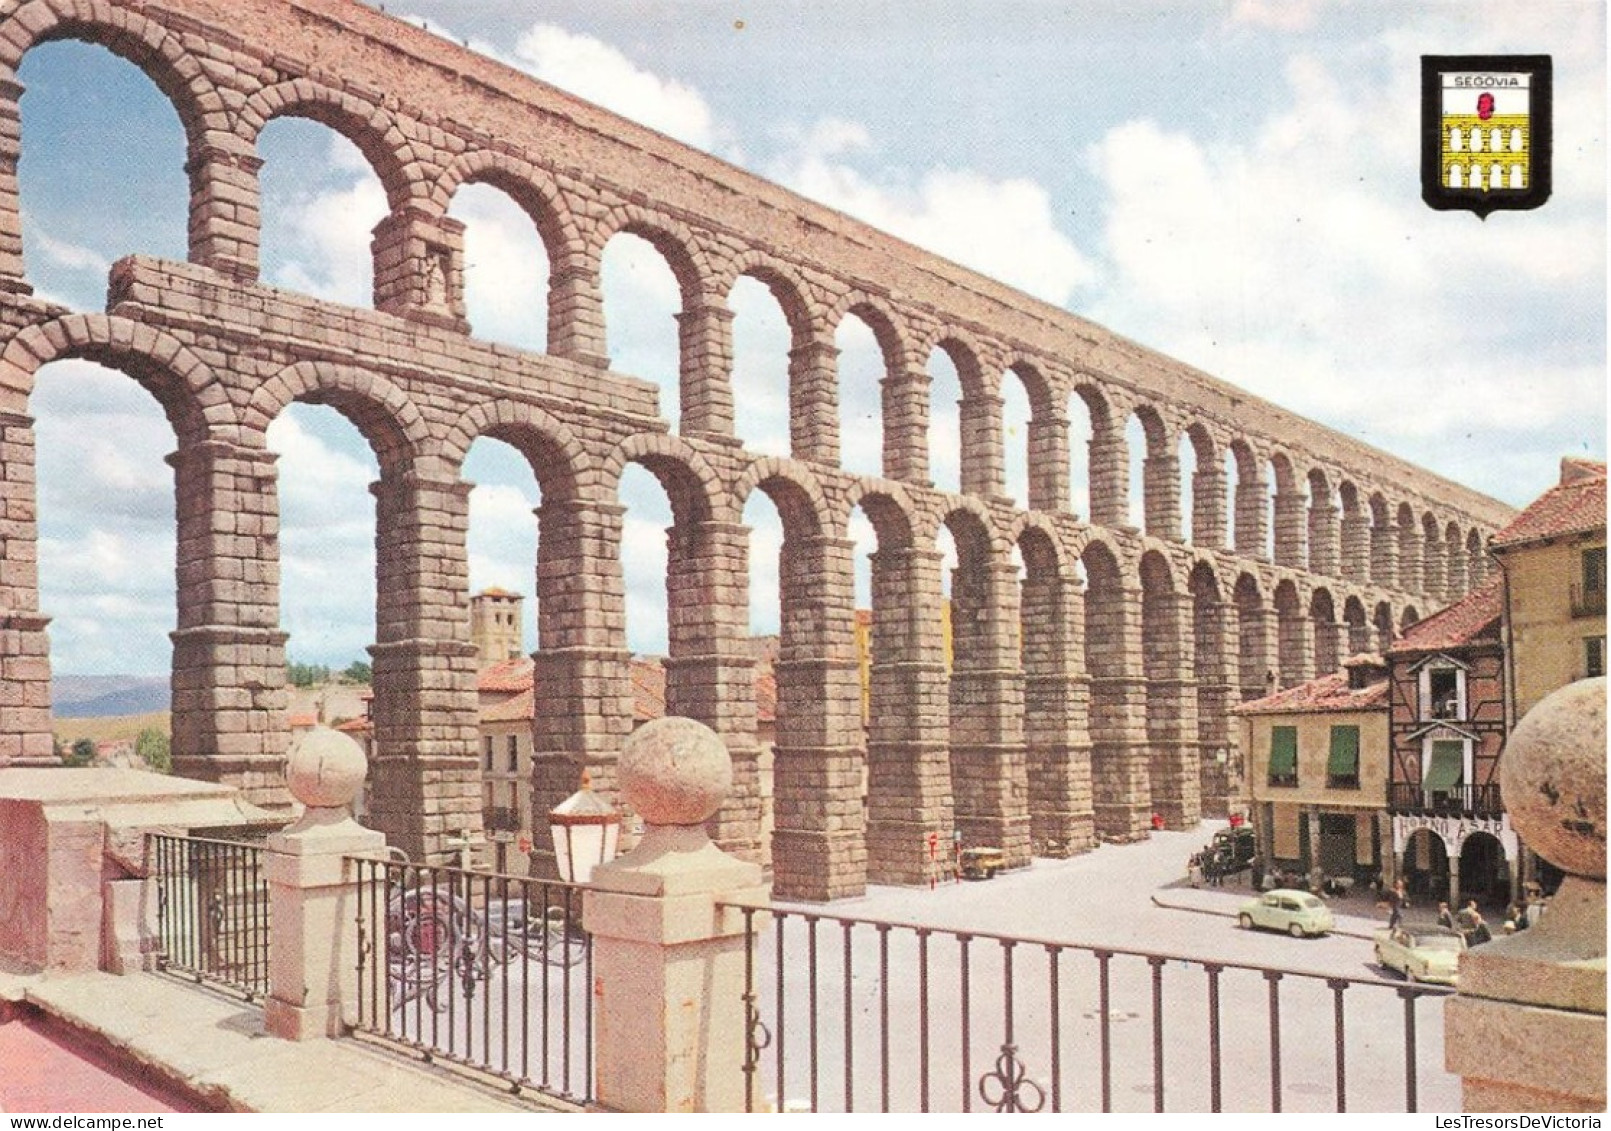 ESPAGNE - Segovia - Vue Générale D'un Aqueduc Romain - Colorisé - Carte Postale - Segovia